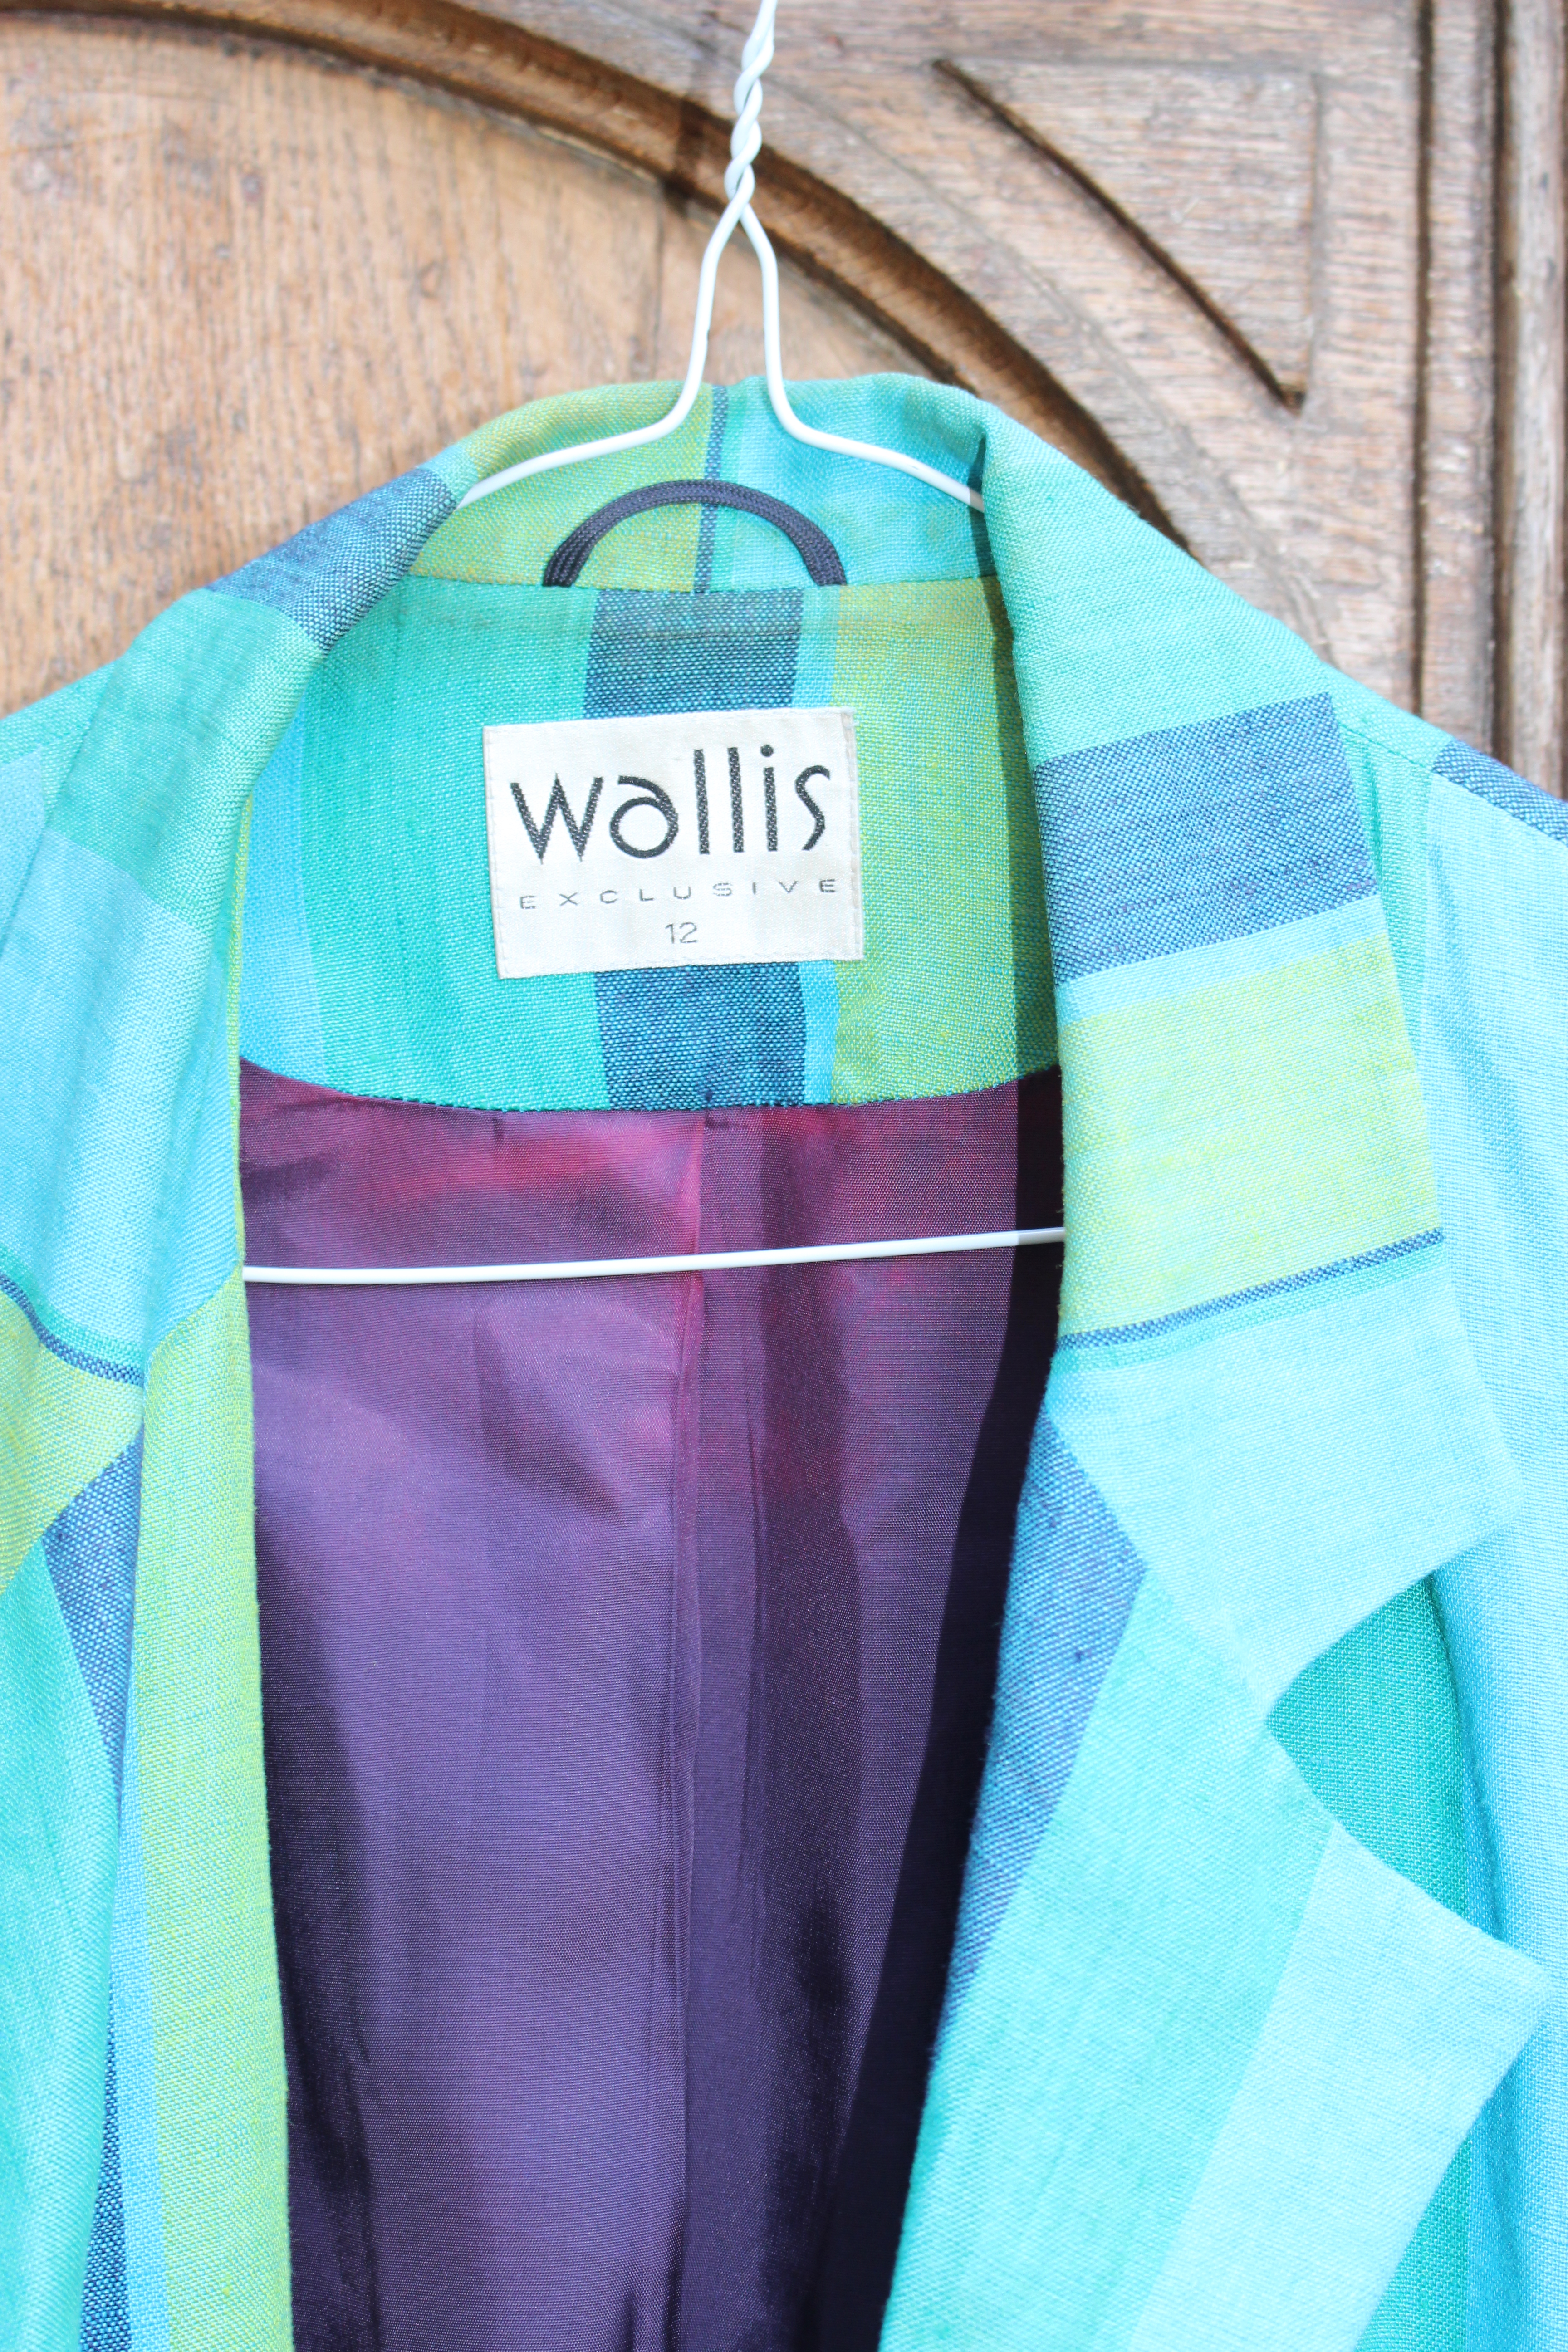 Wallis striped linen blazer, showing label and purple lining